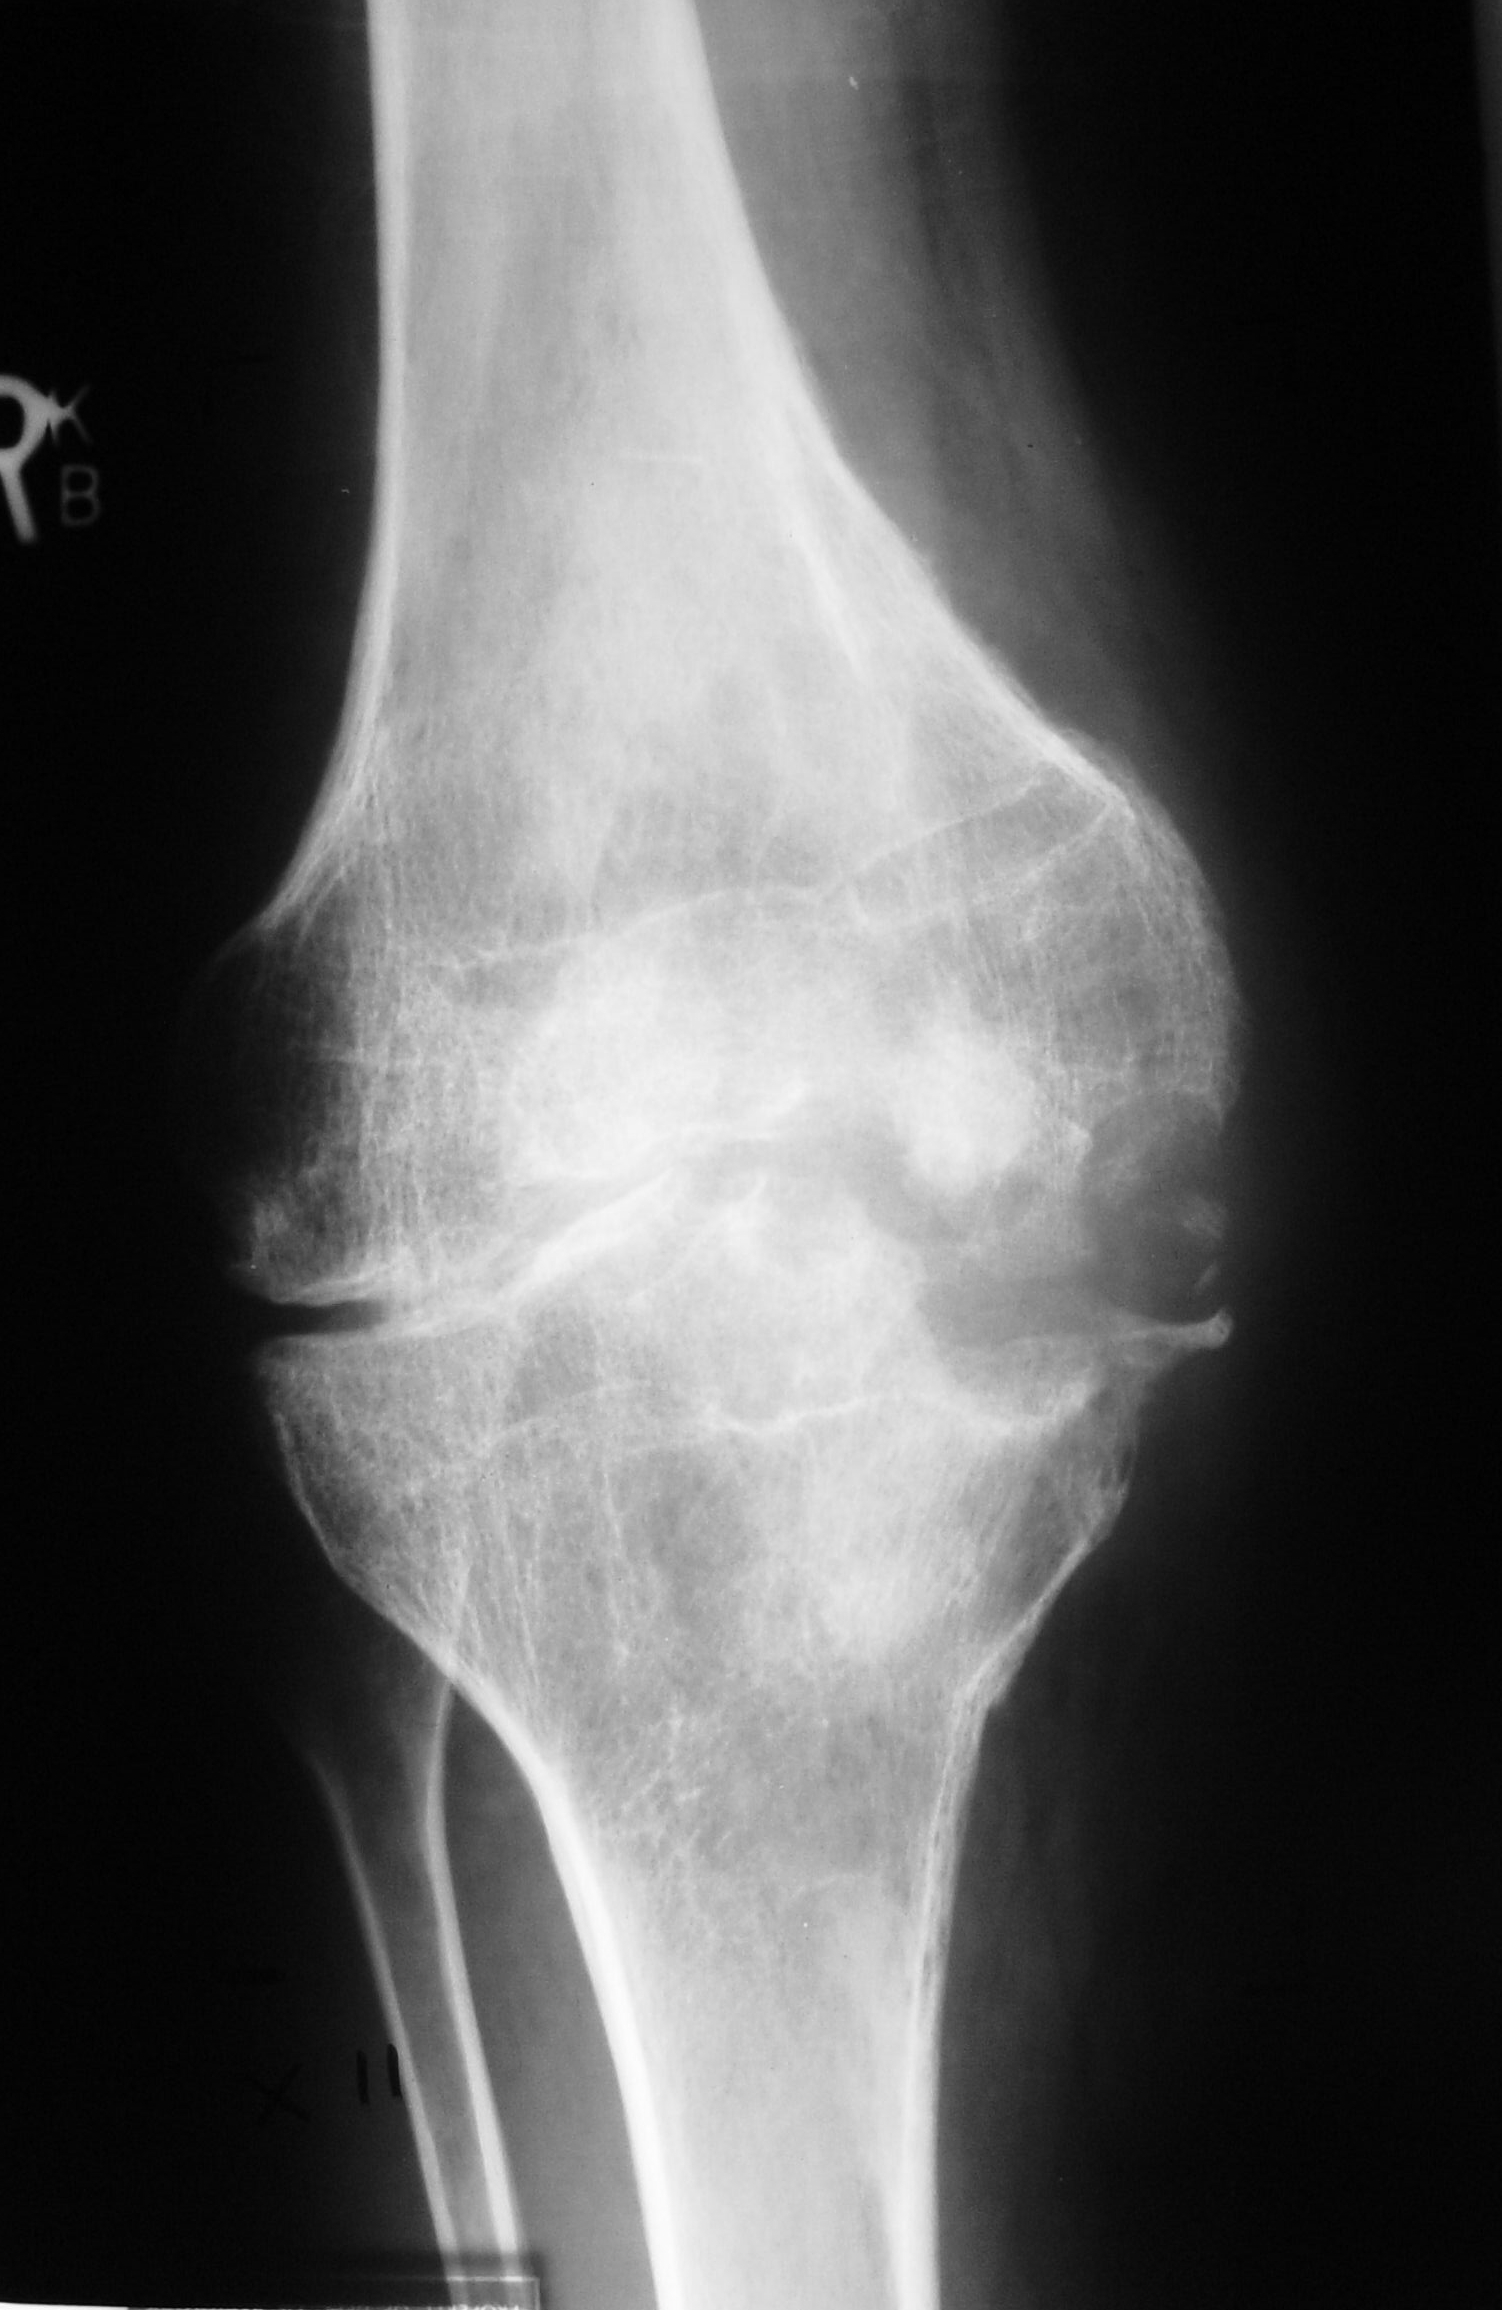 Tuberculosis of knee